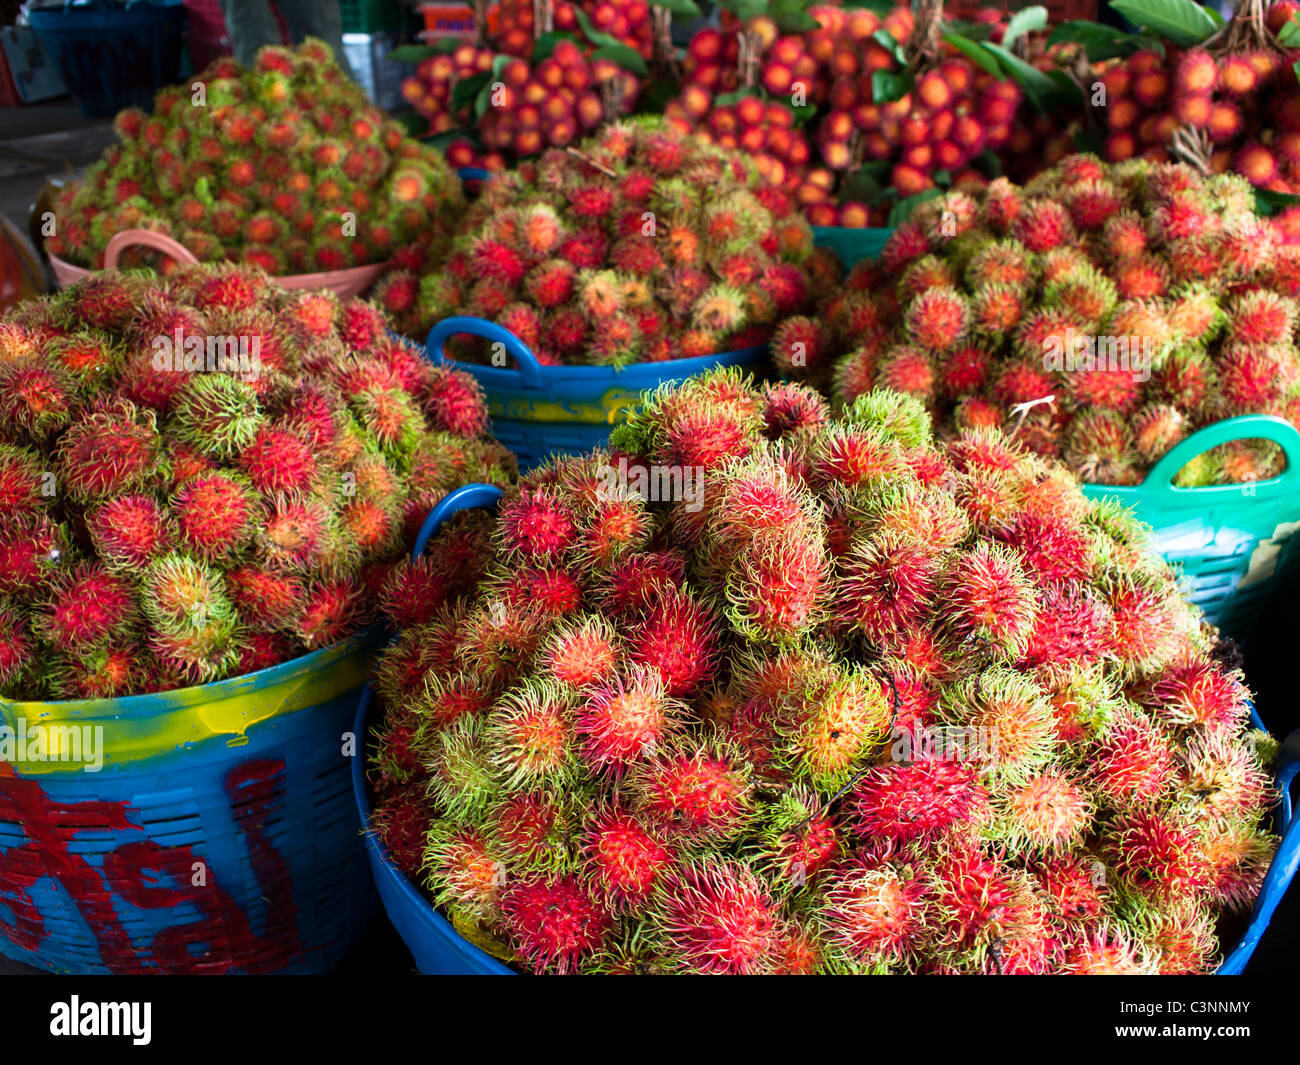 Rambutans fruit in Thailand fruit market Stock Photo